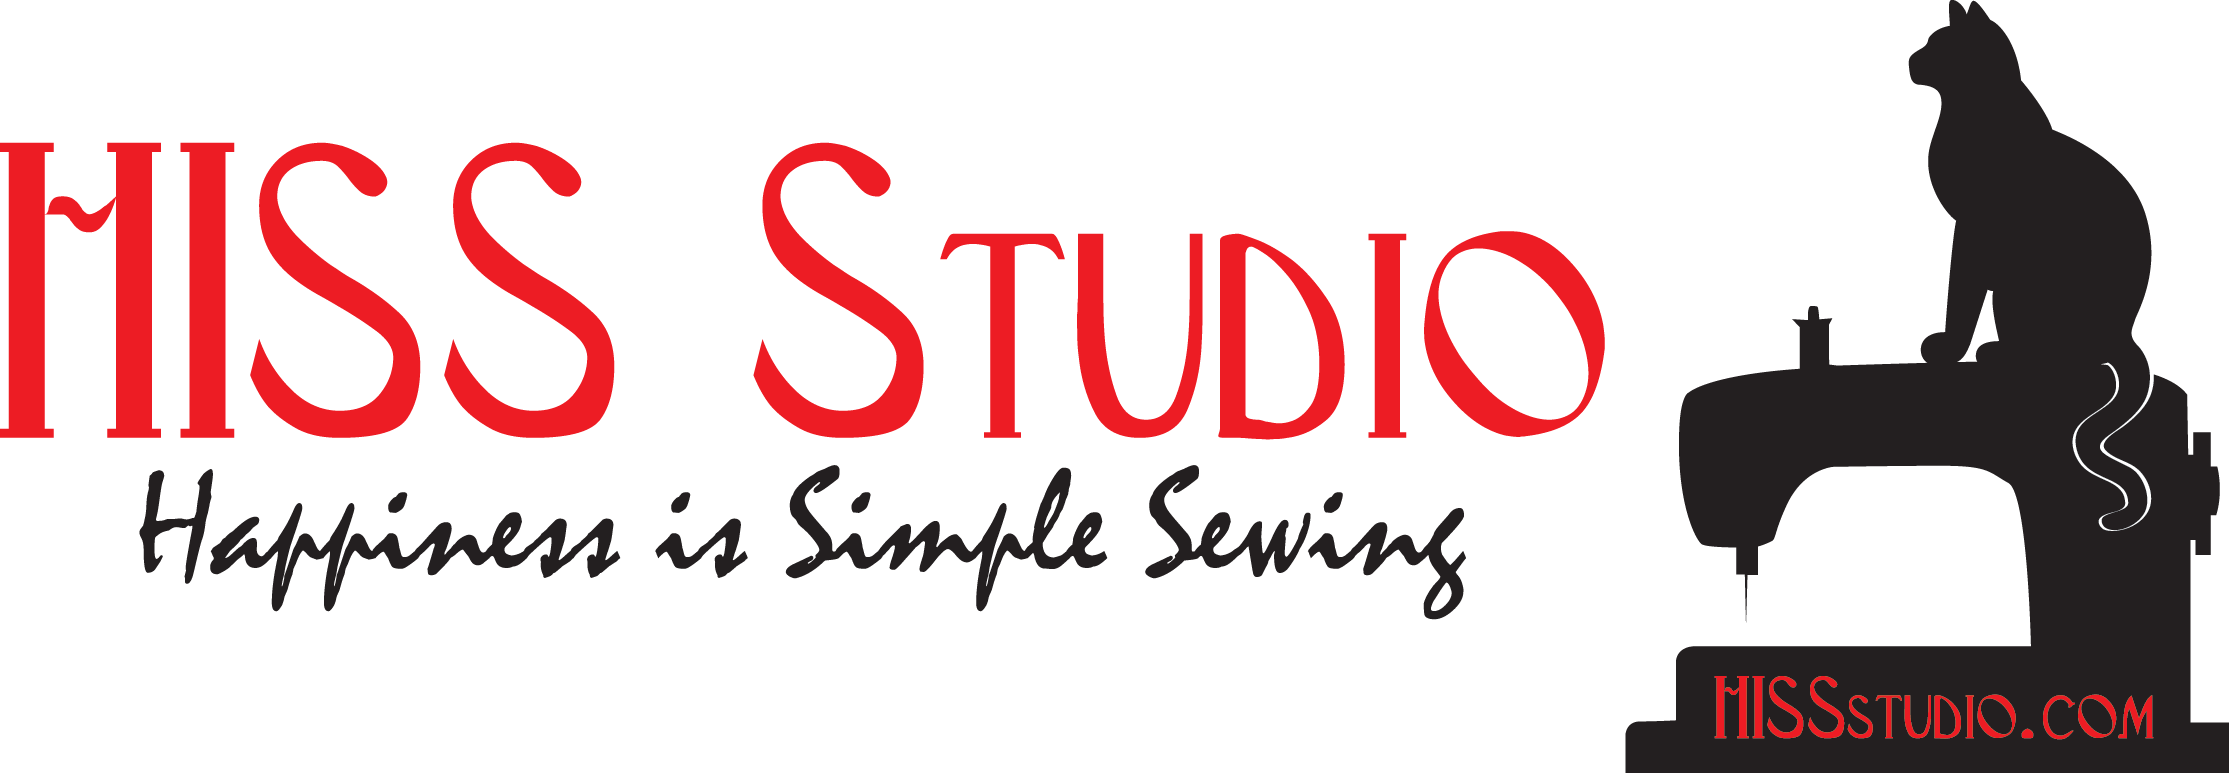 Hiss Studio Logo